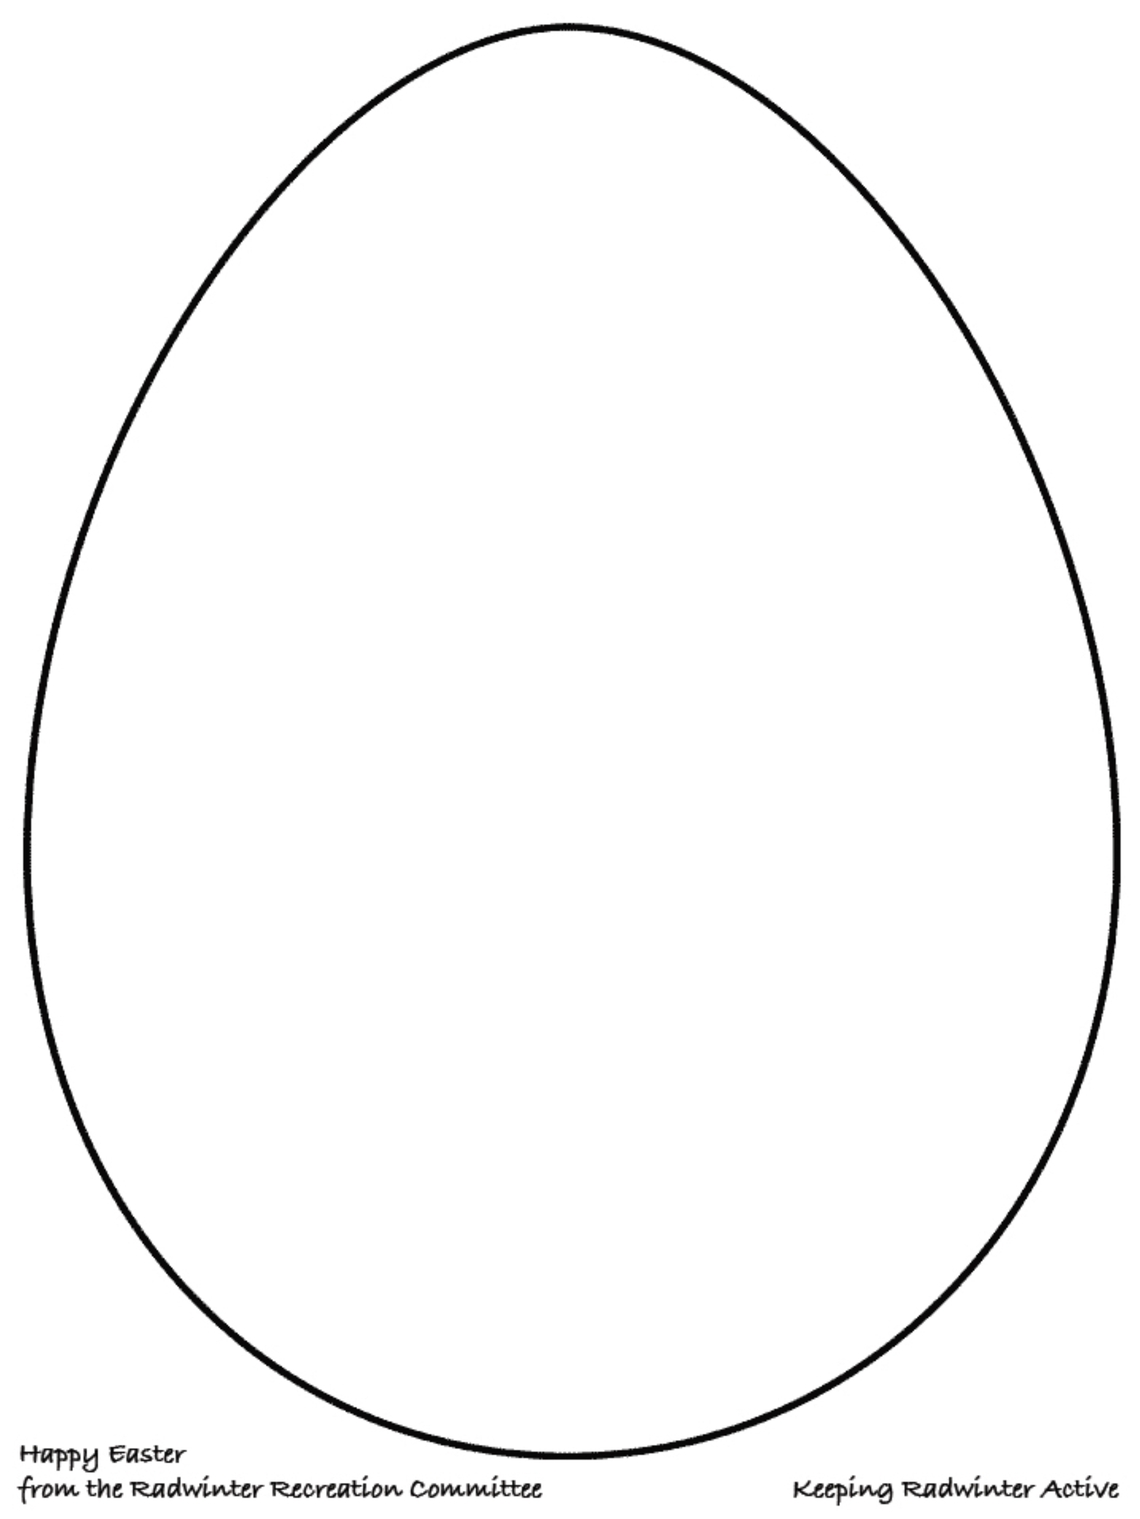 Radwinter Egg